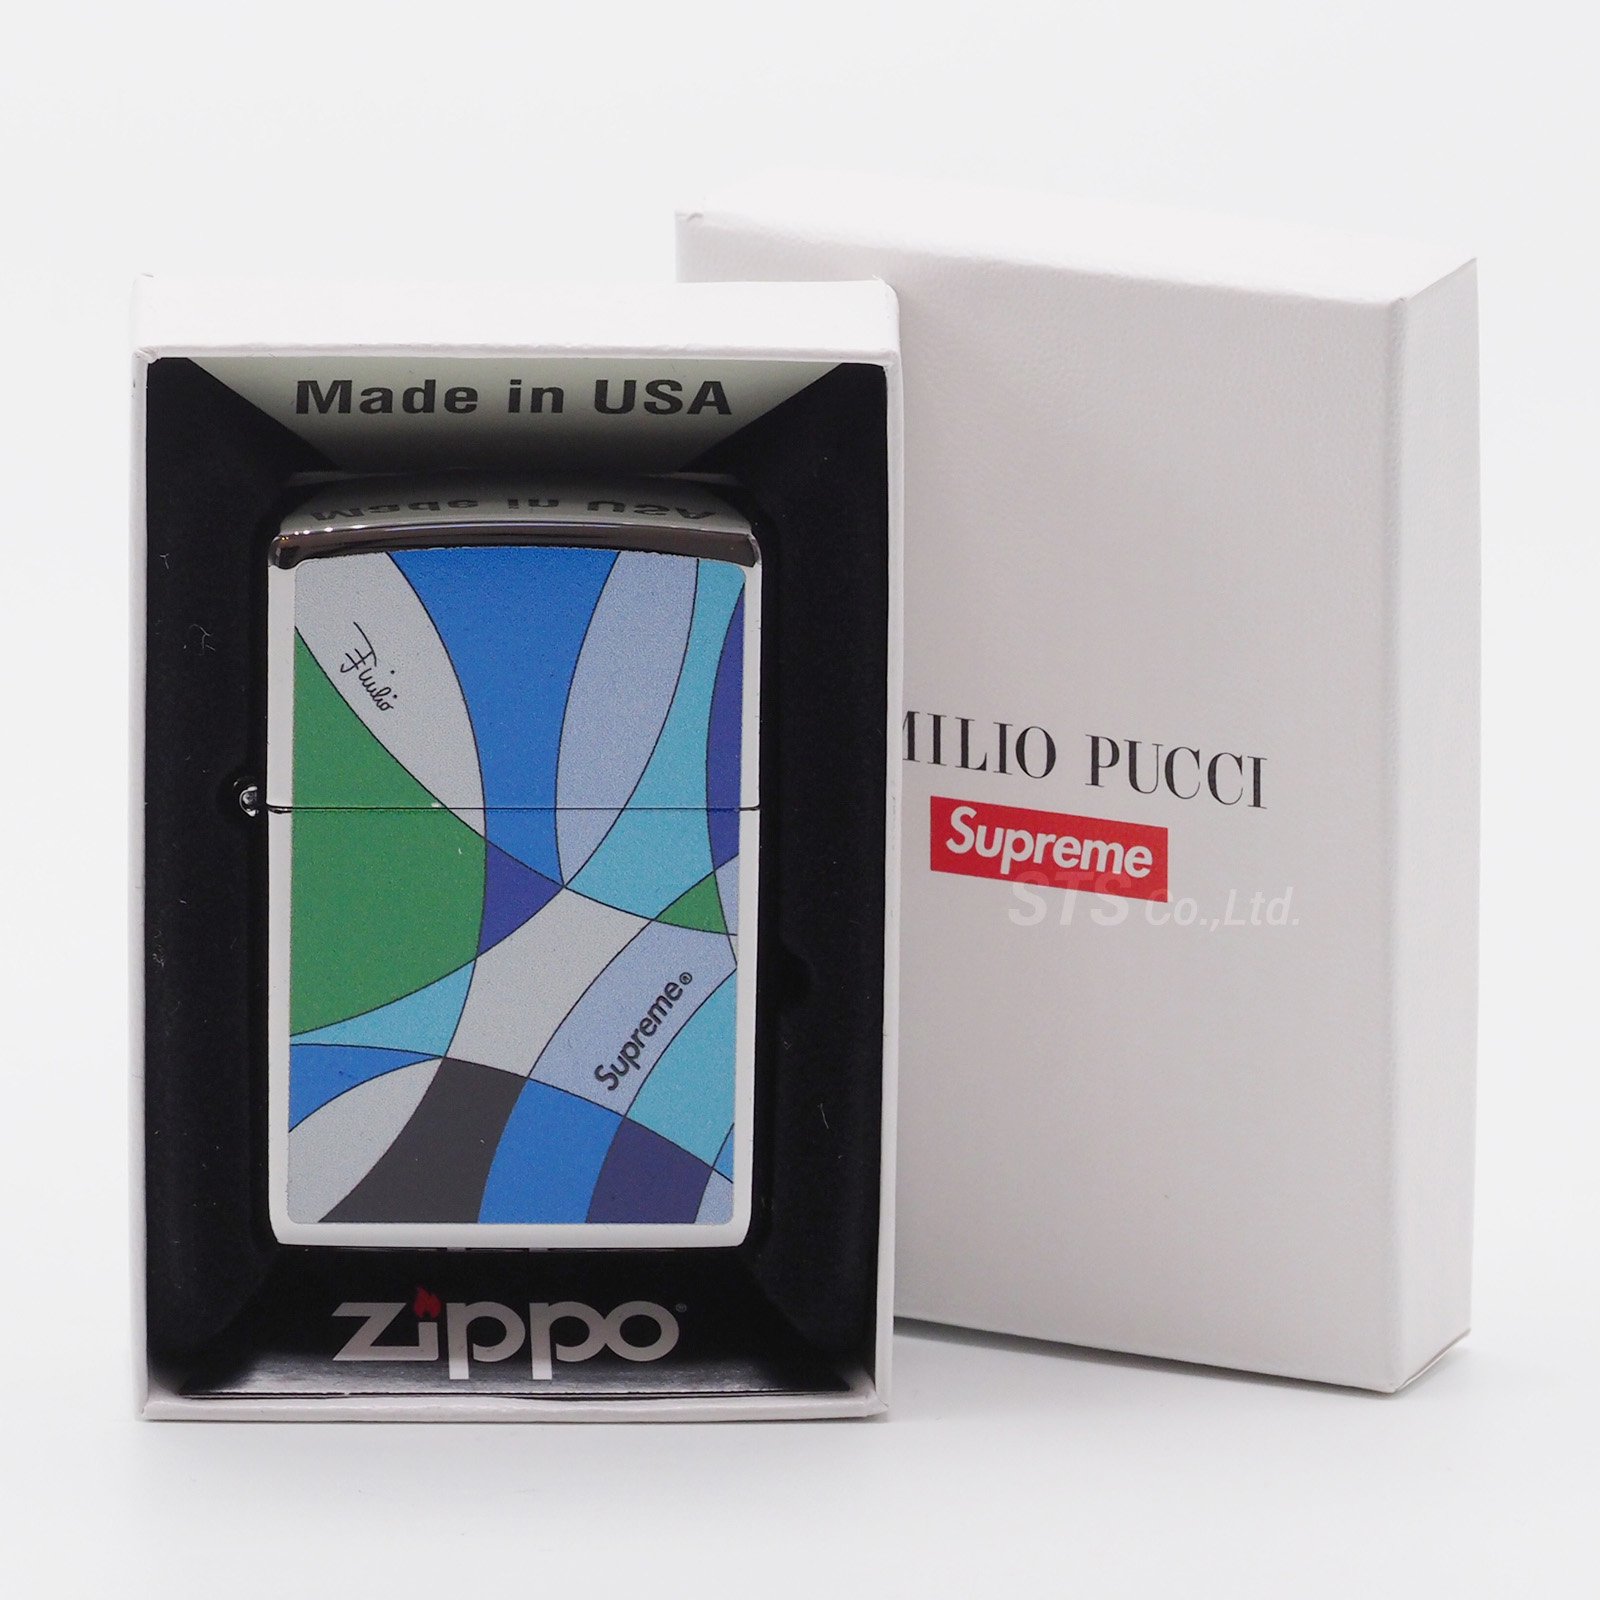 Supreme/Emilio Pucci Zippo - UG.SHAFT